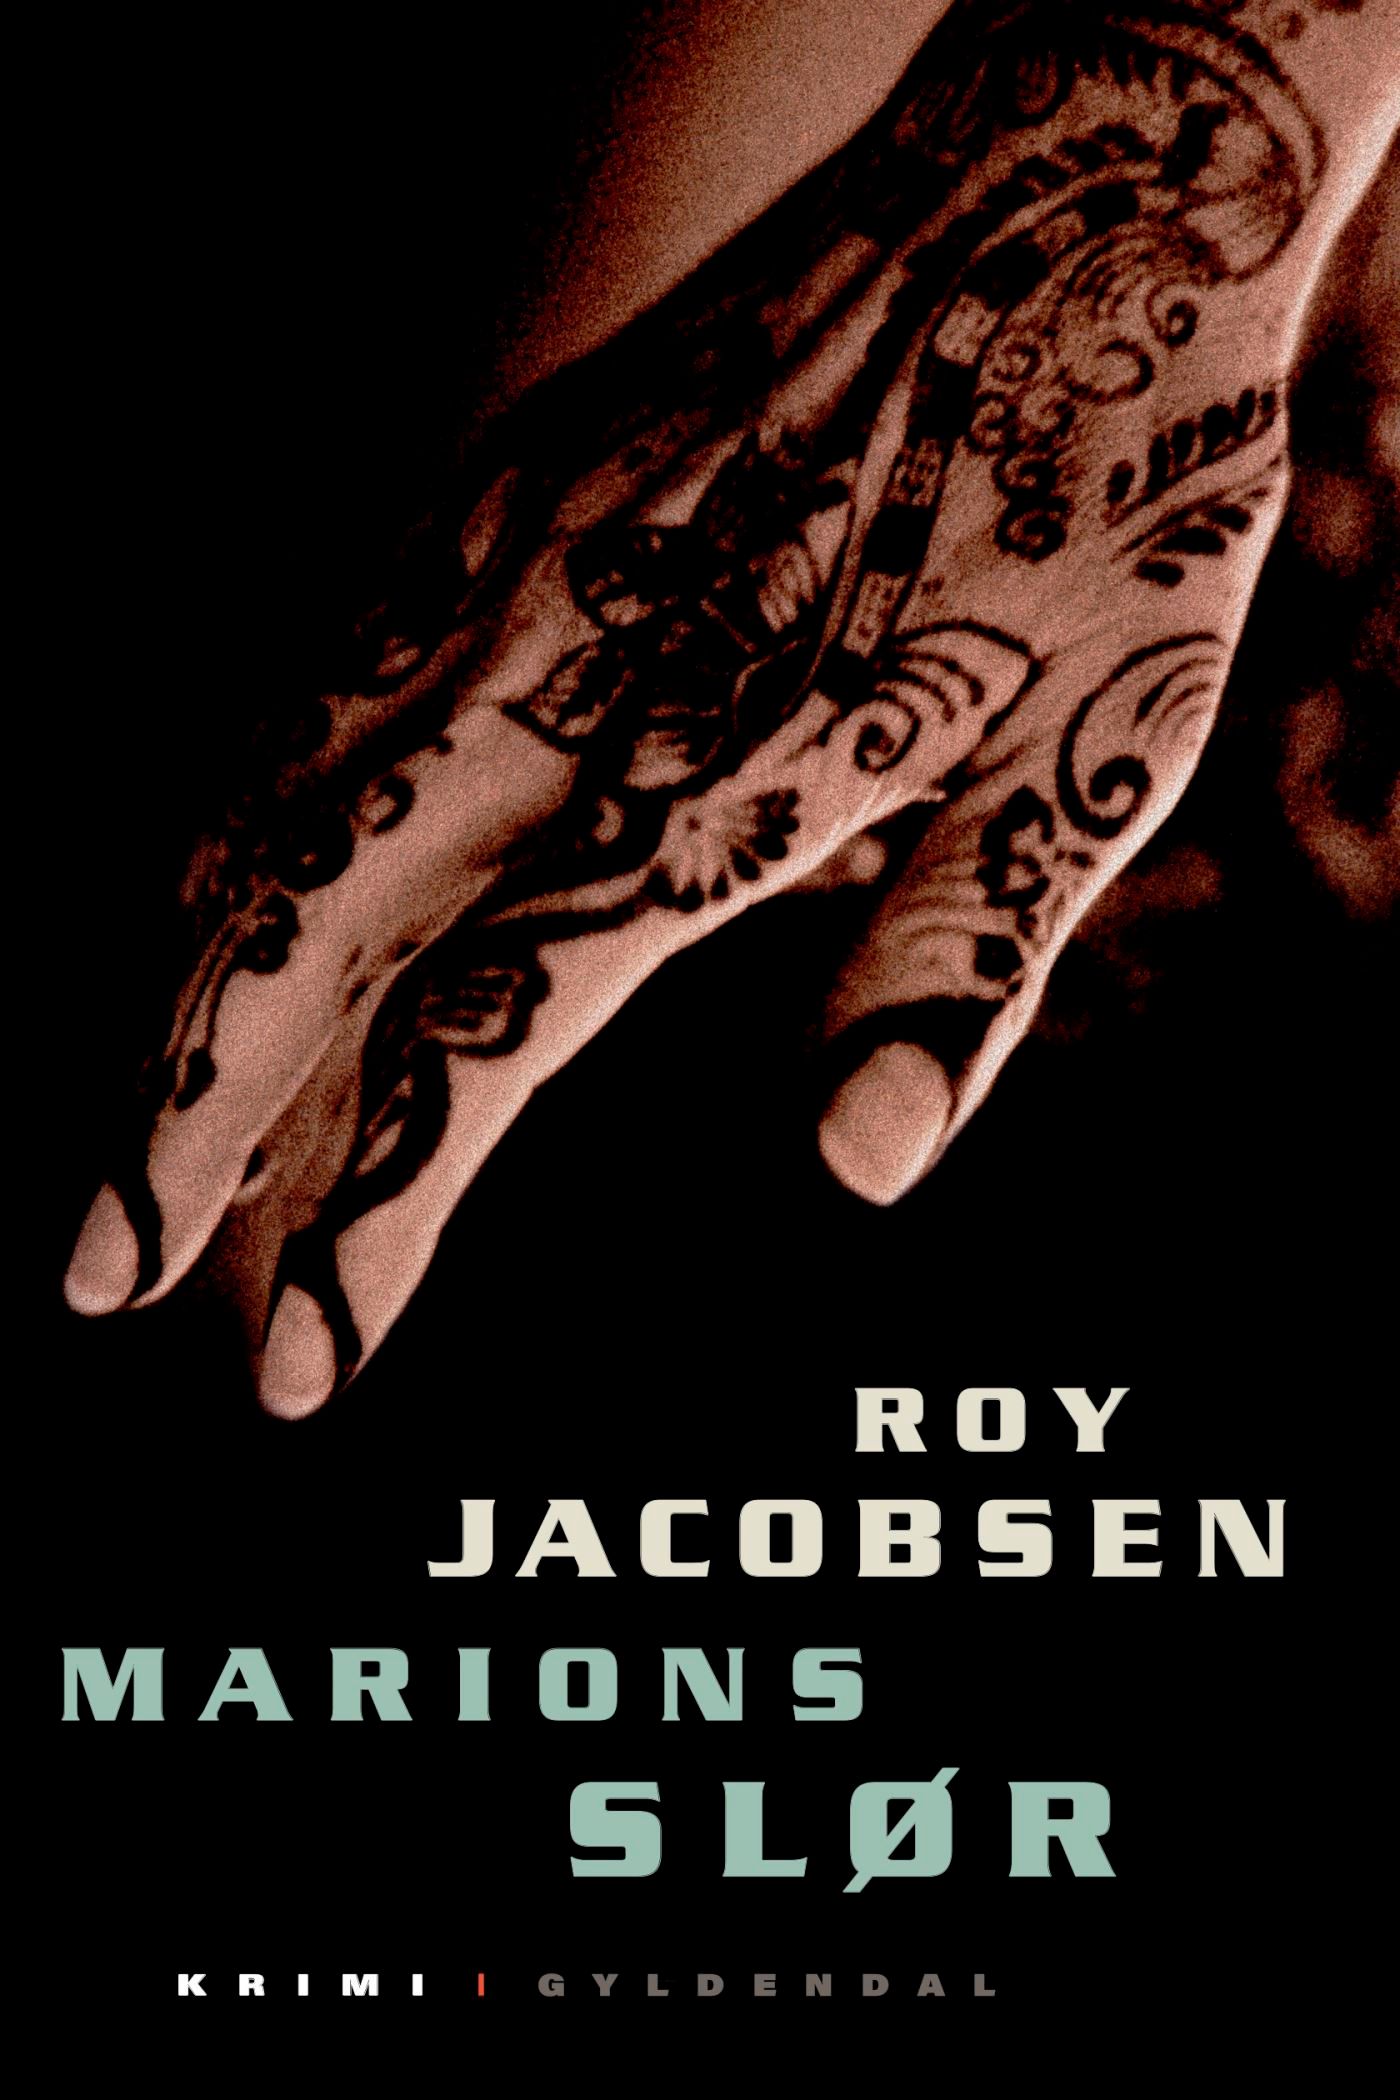 Marions slør, ljudbok av Roy Jacobsen